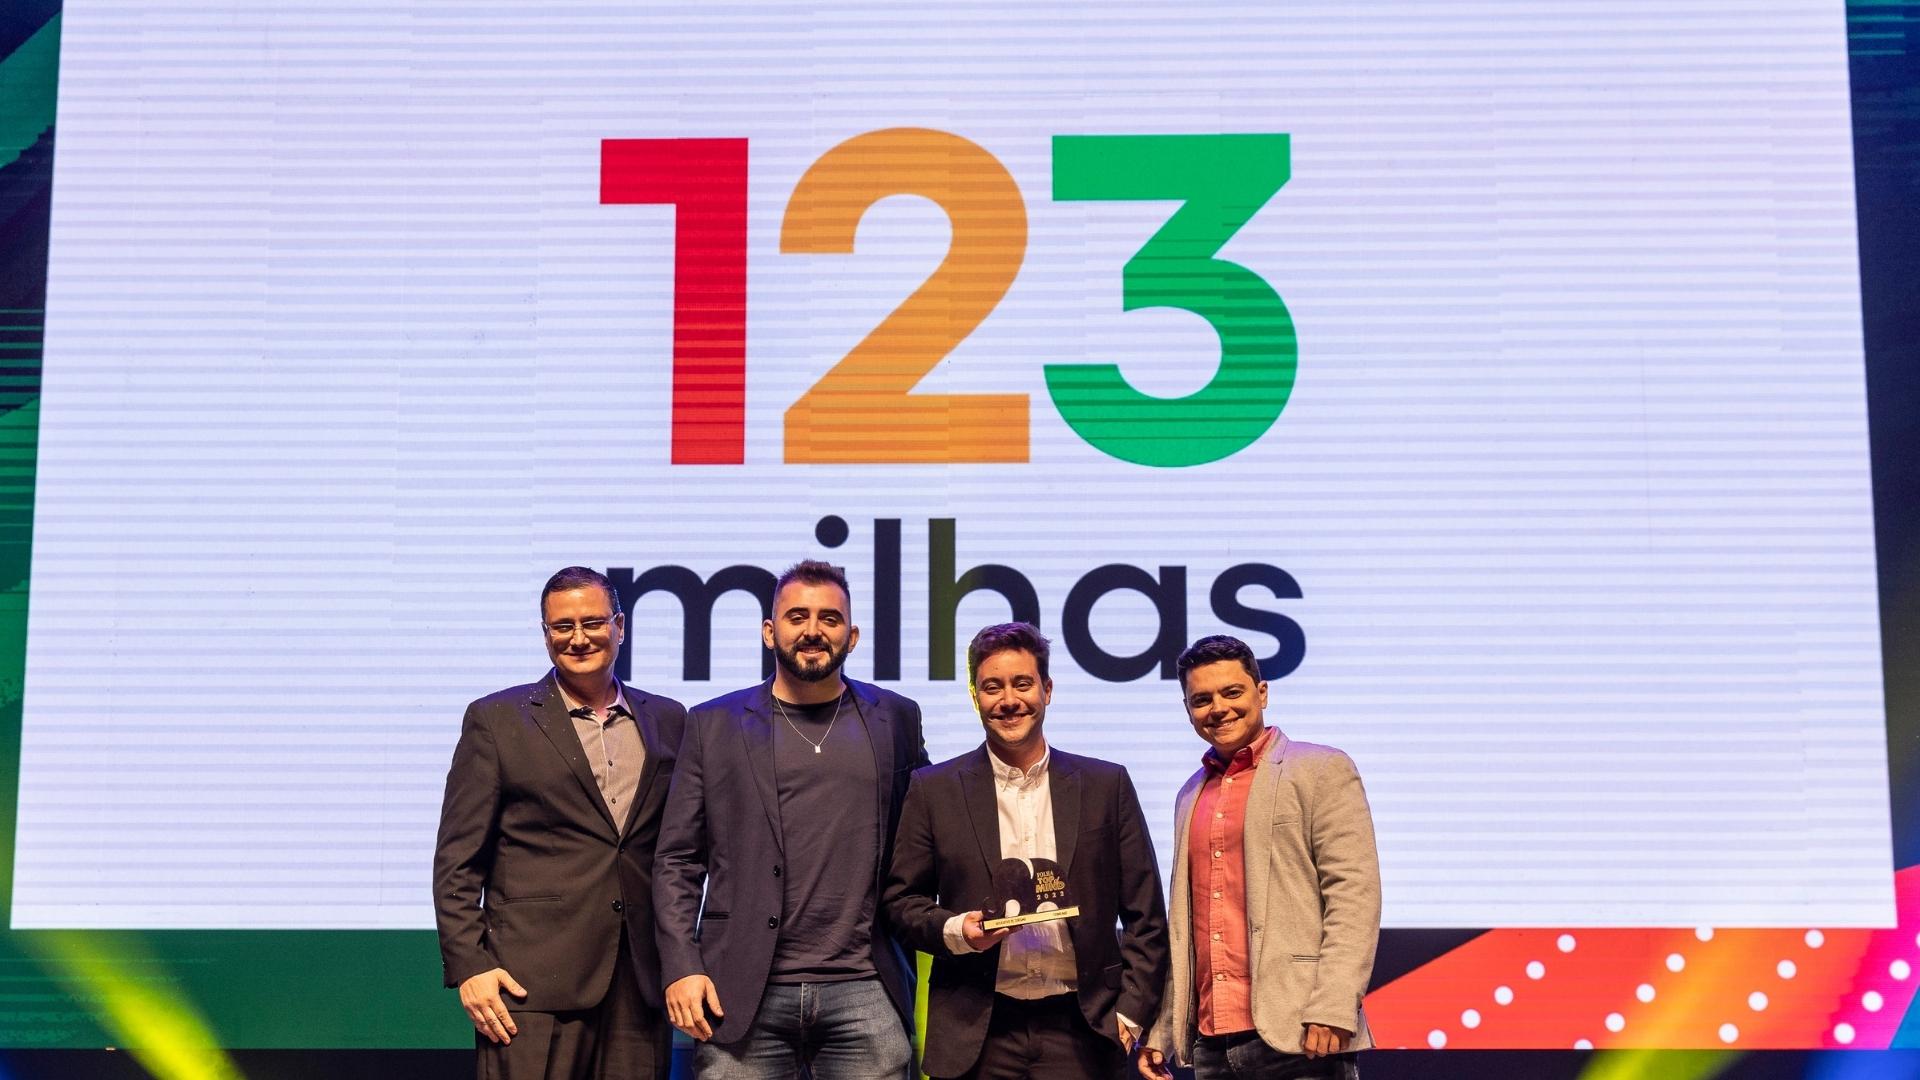 123milhas vence prêmio Folha Top of Mind 2022